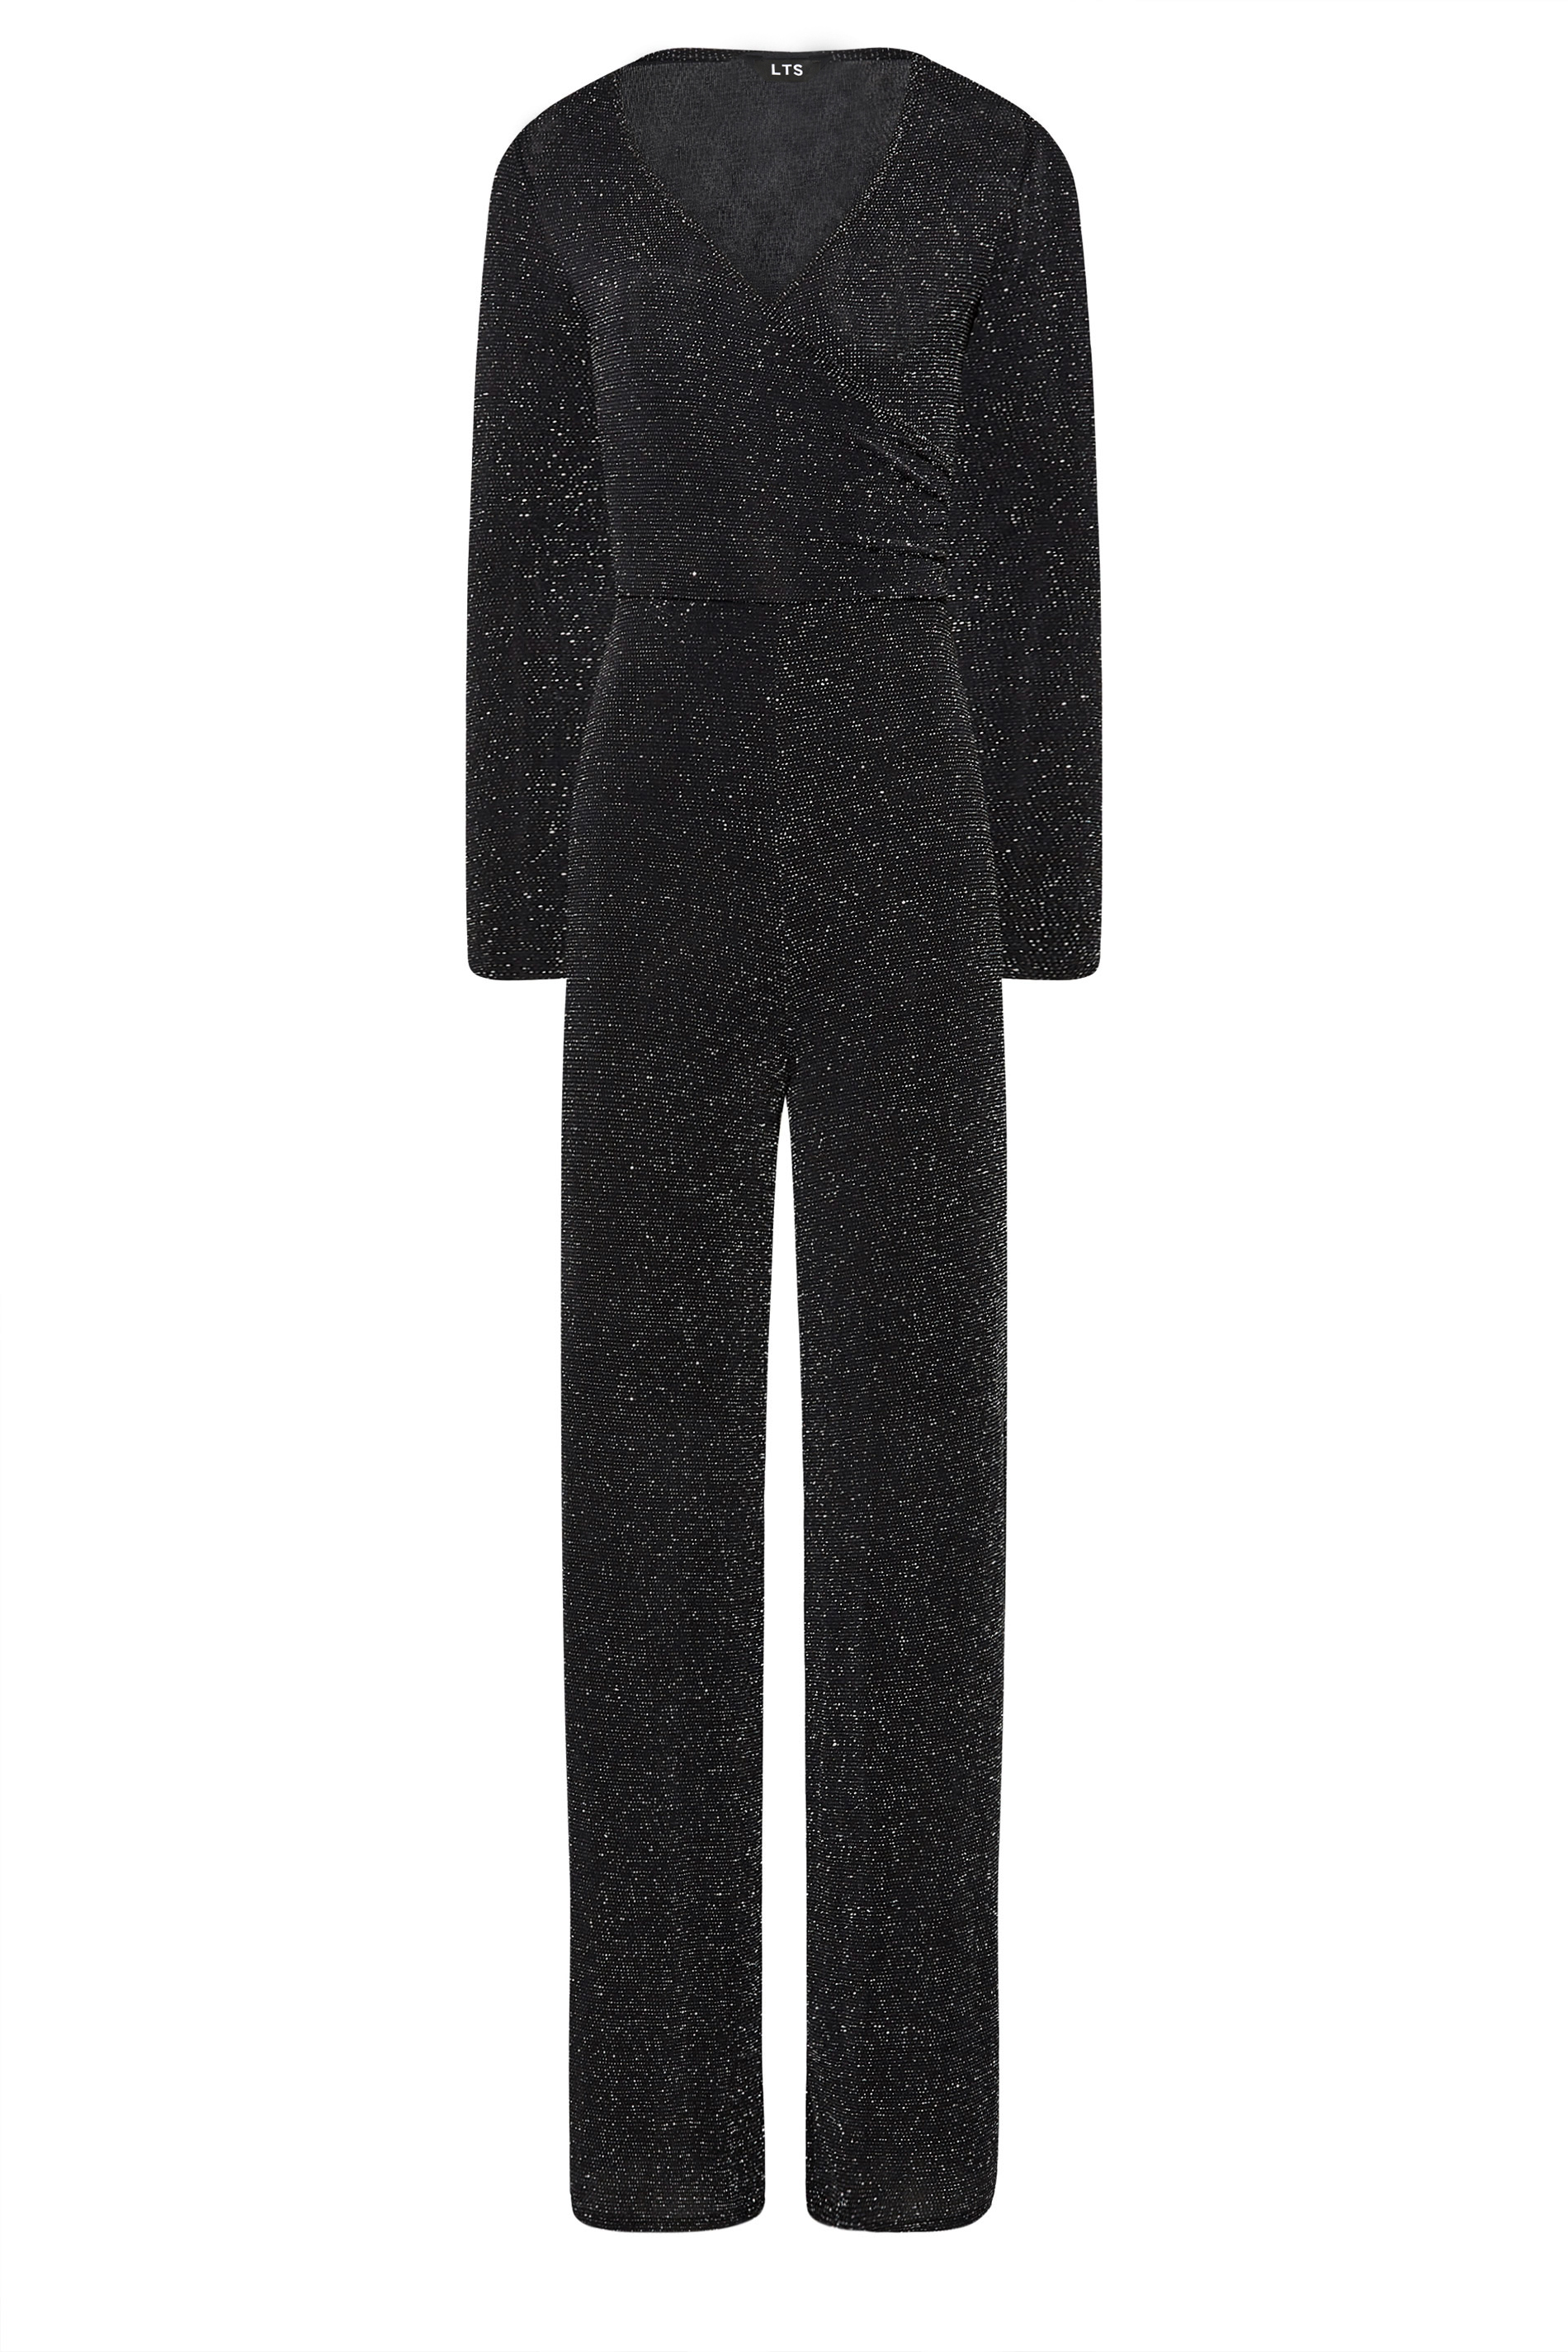 LTS Tall Women's Black & Silver Glitter Wrap Jumpsuit | Long Tall Sally 2